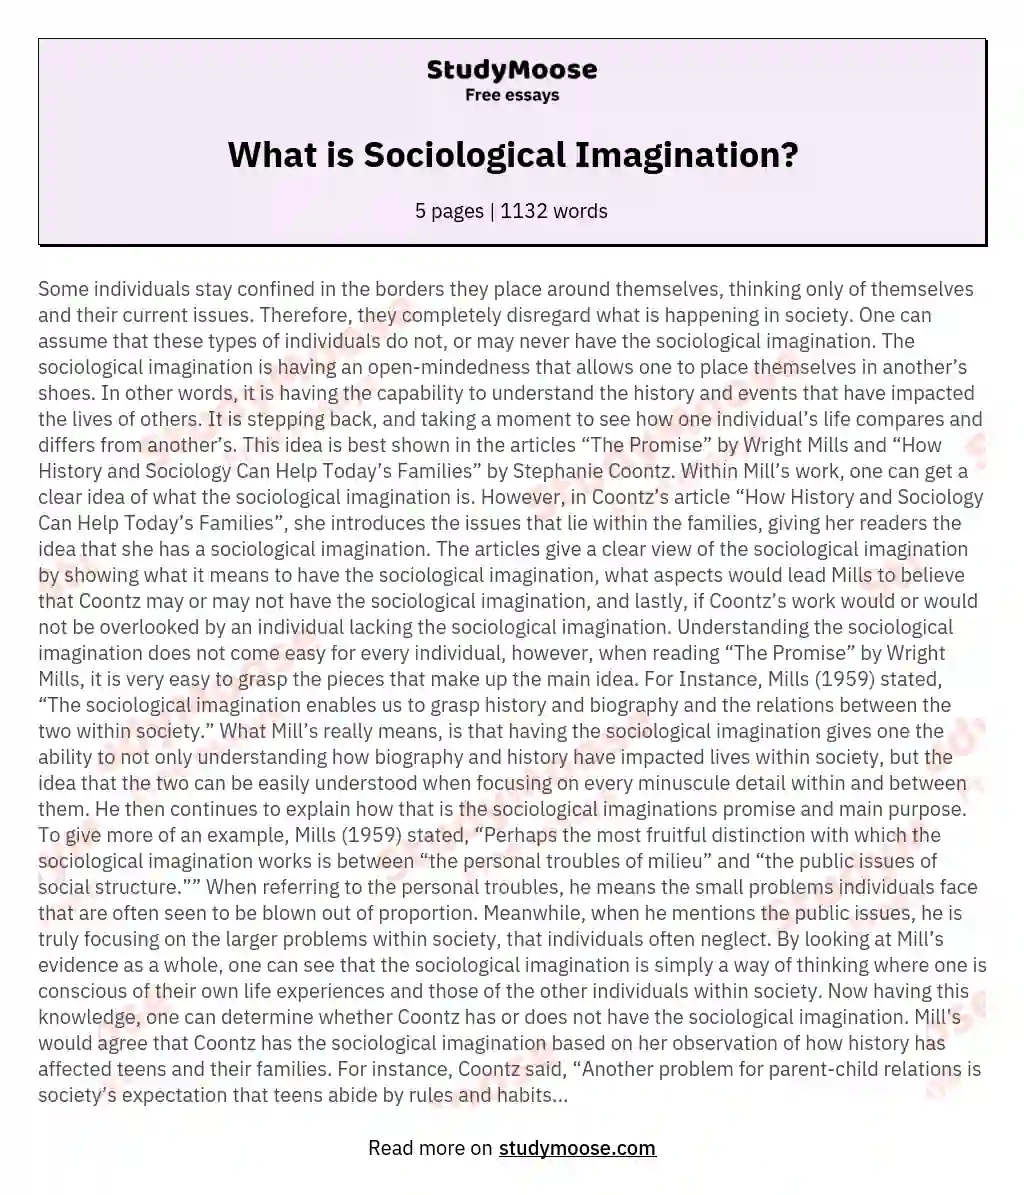 sociological imagination essay question